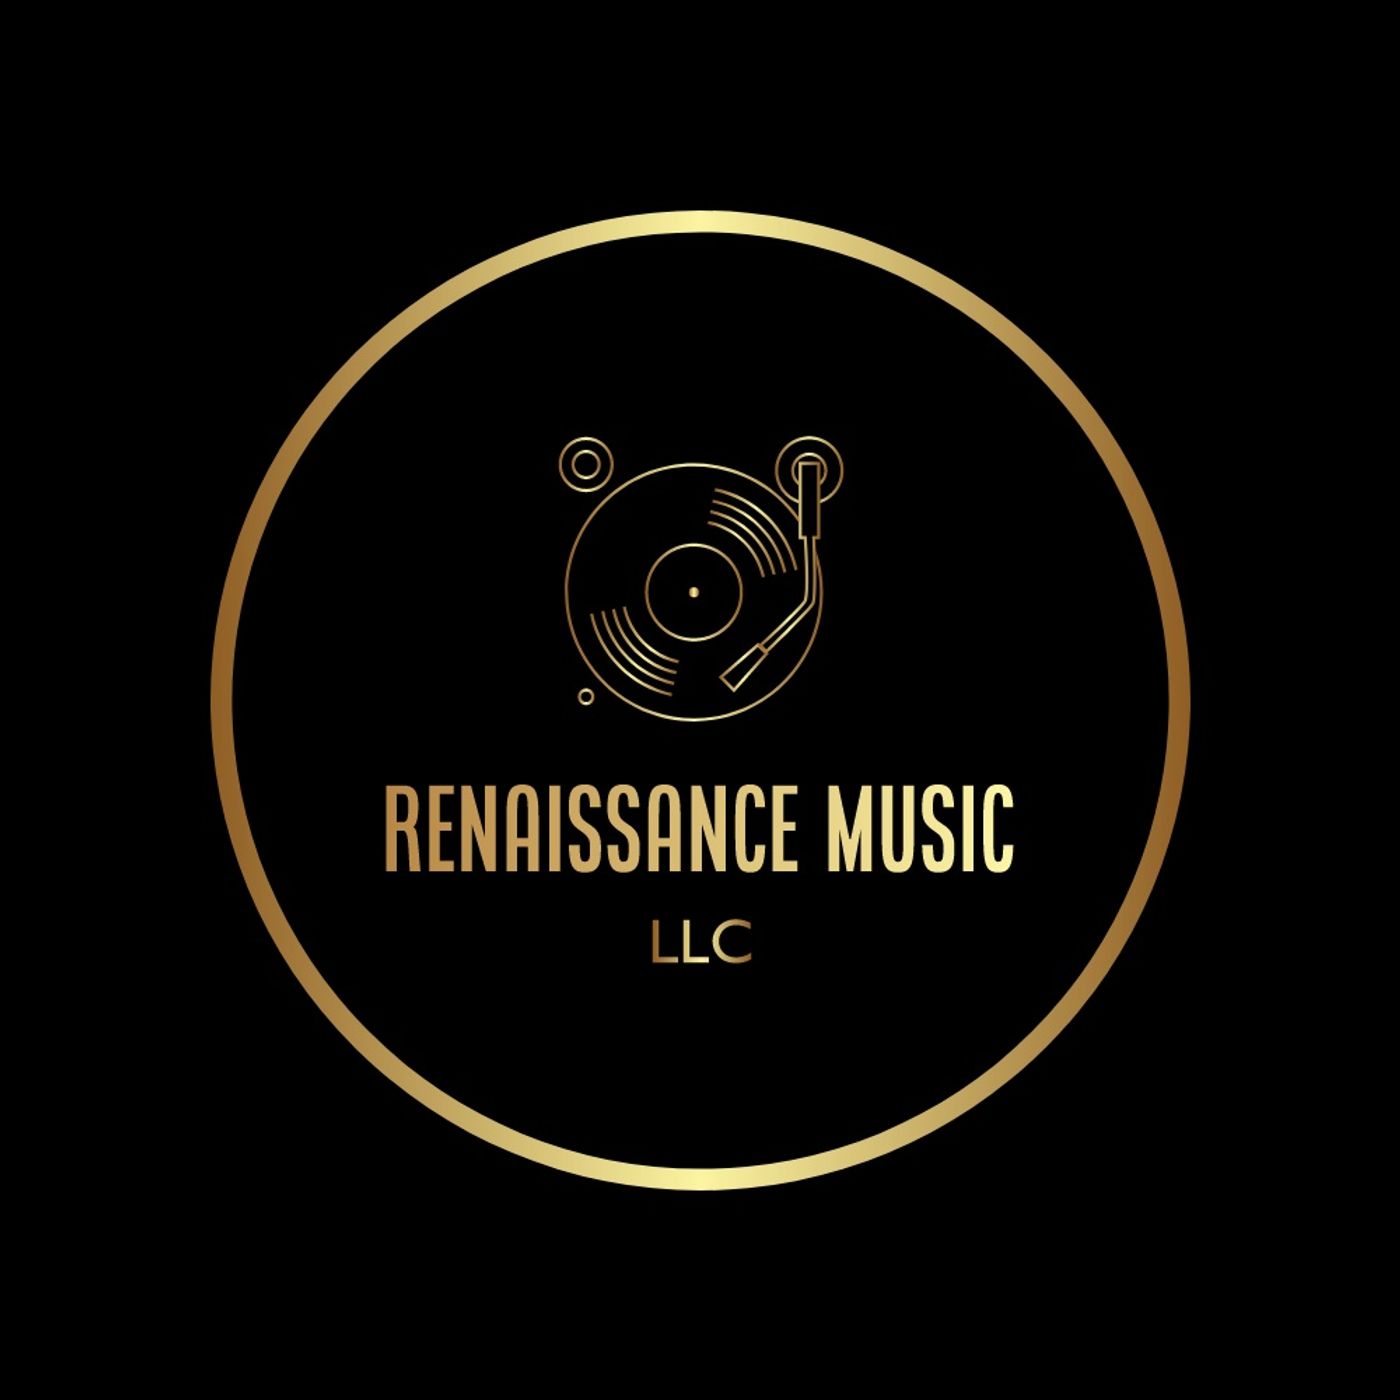 Renaissance Music LLC presents: